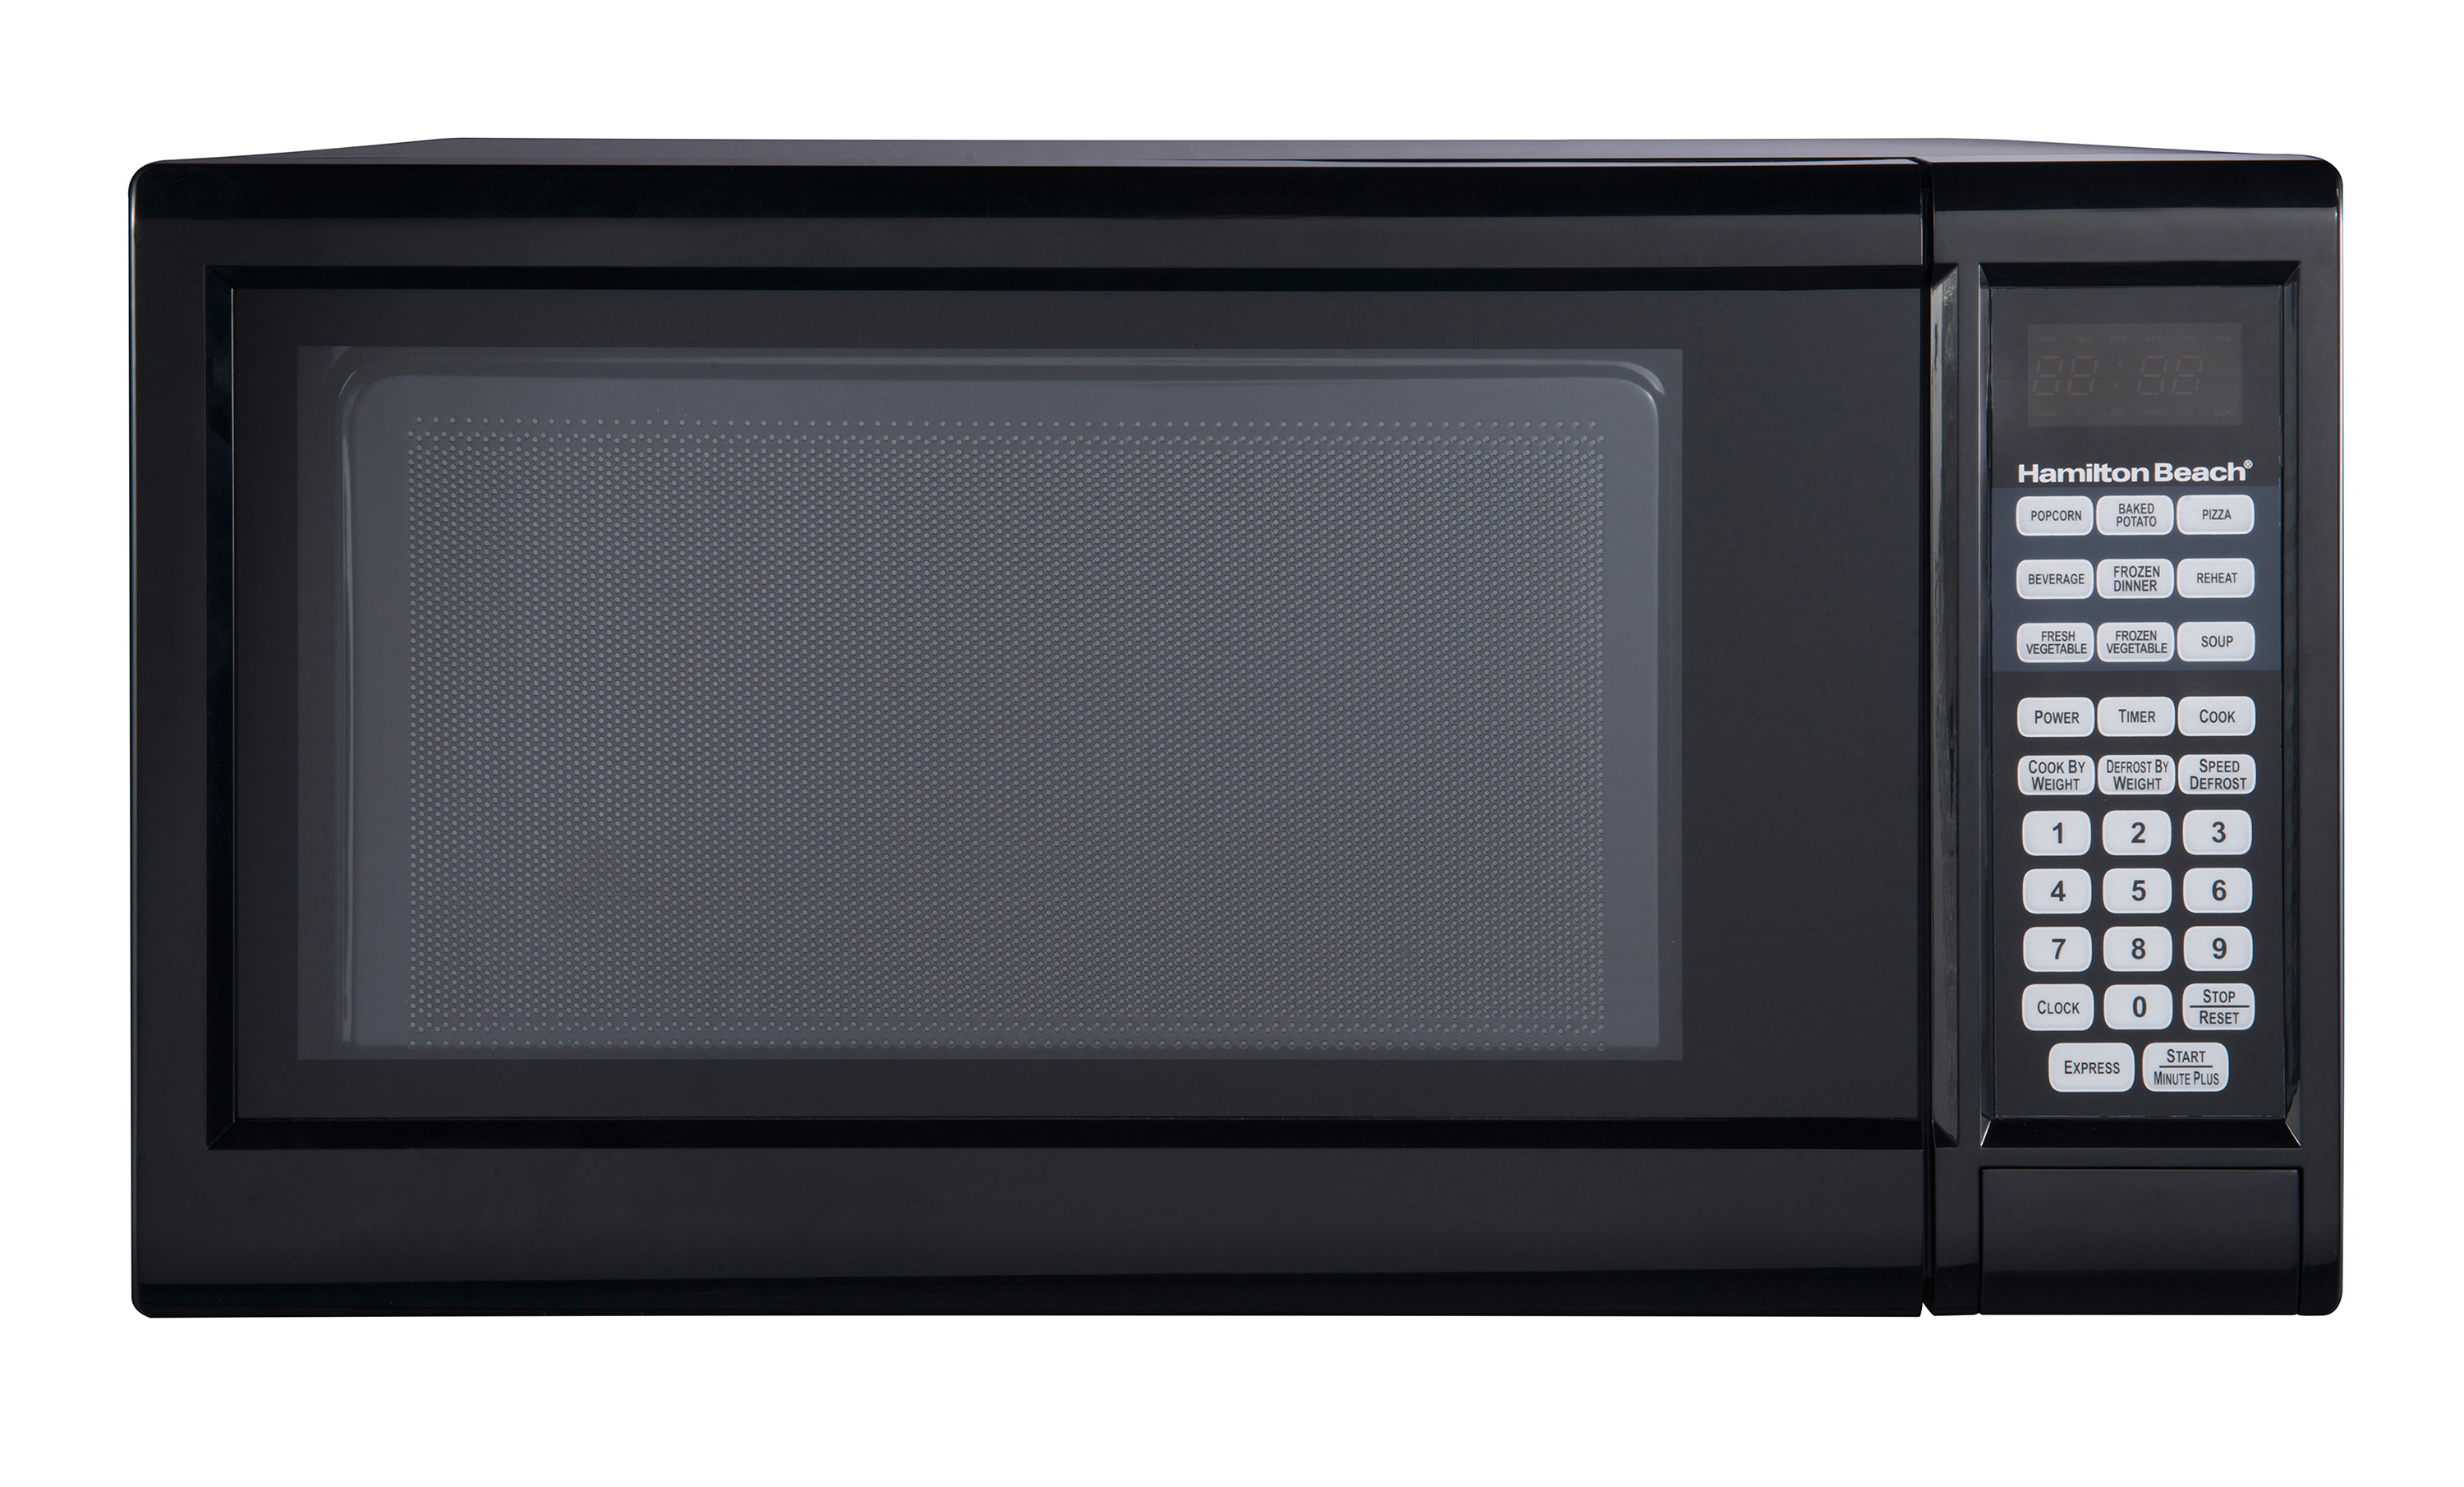 Hamilton Beach 1.3 Cu ft Digital Microwave Oven, Black - image 5 of 6